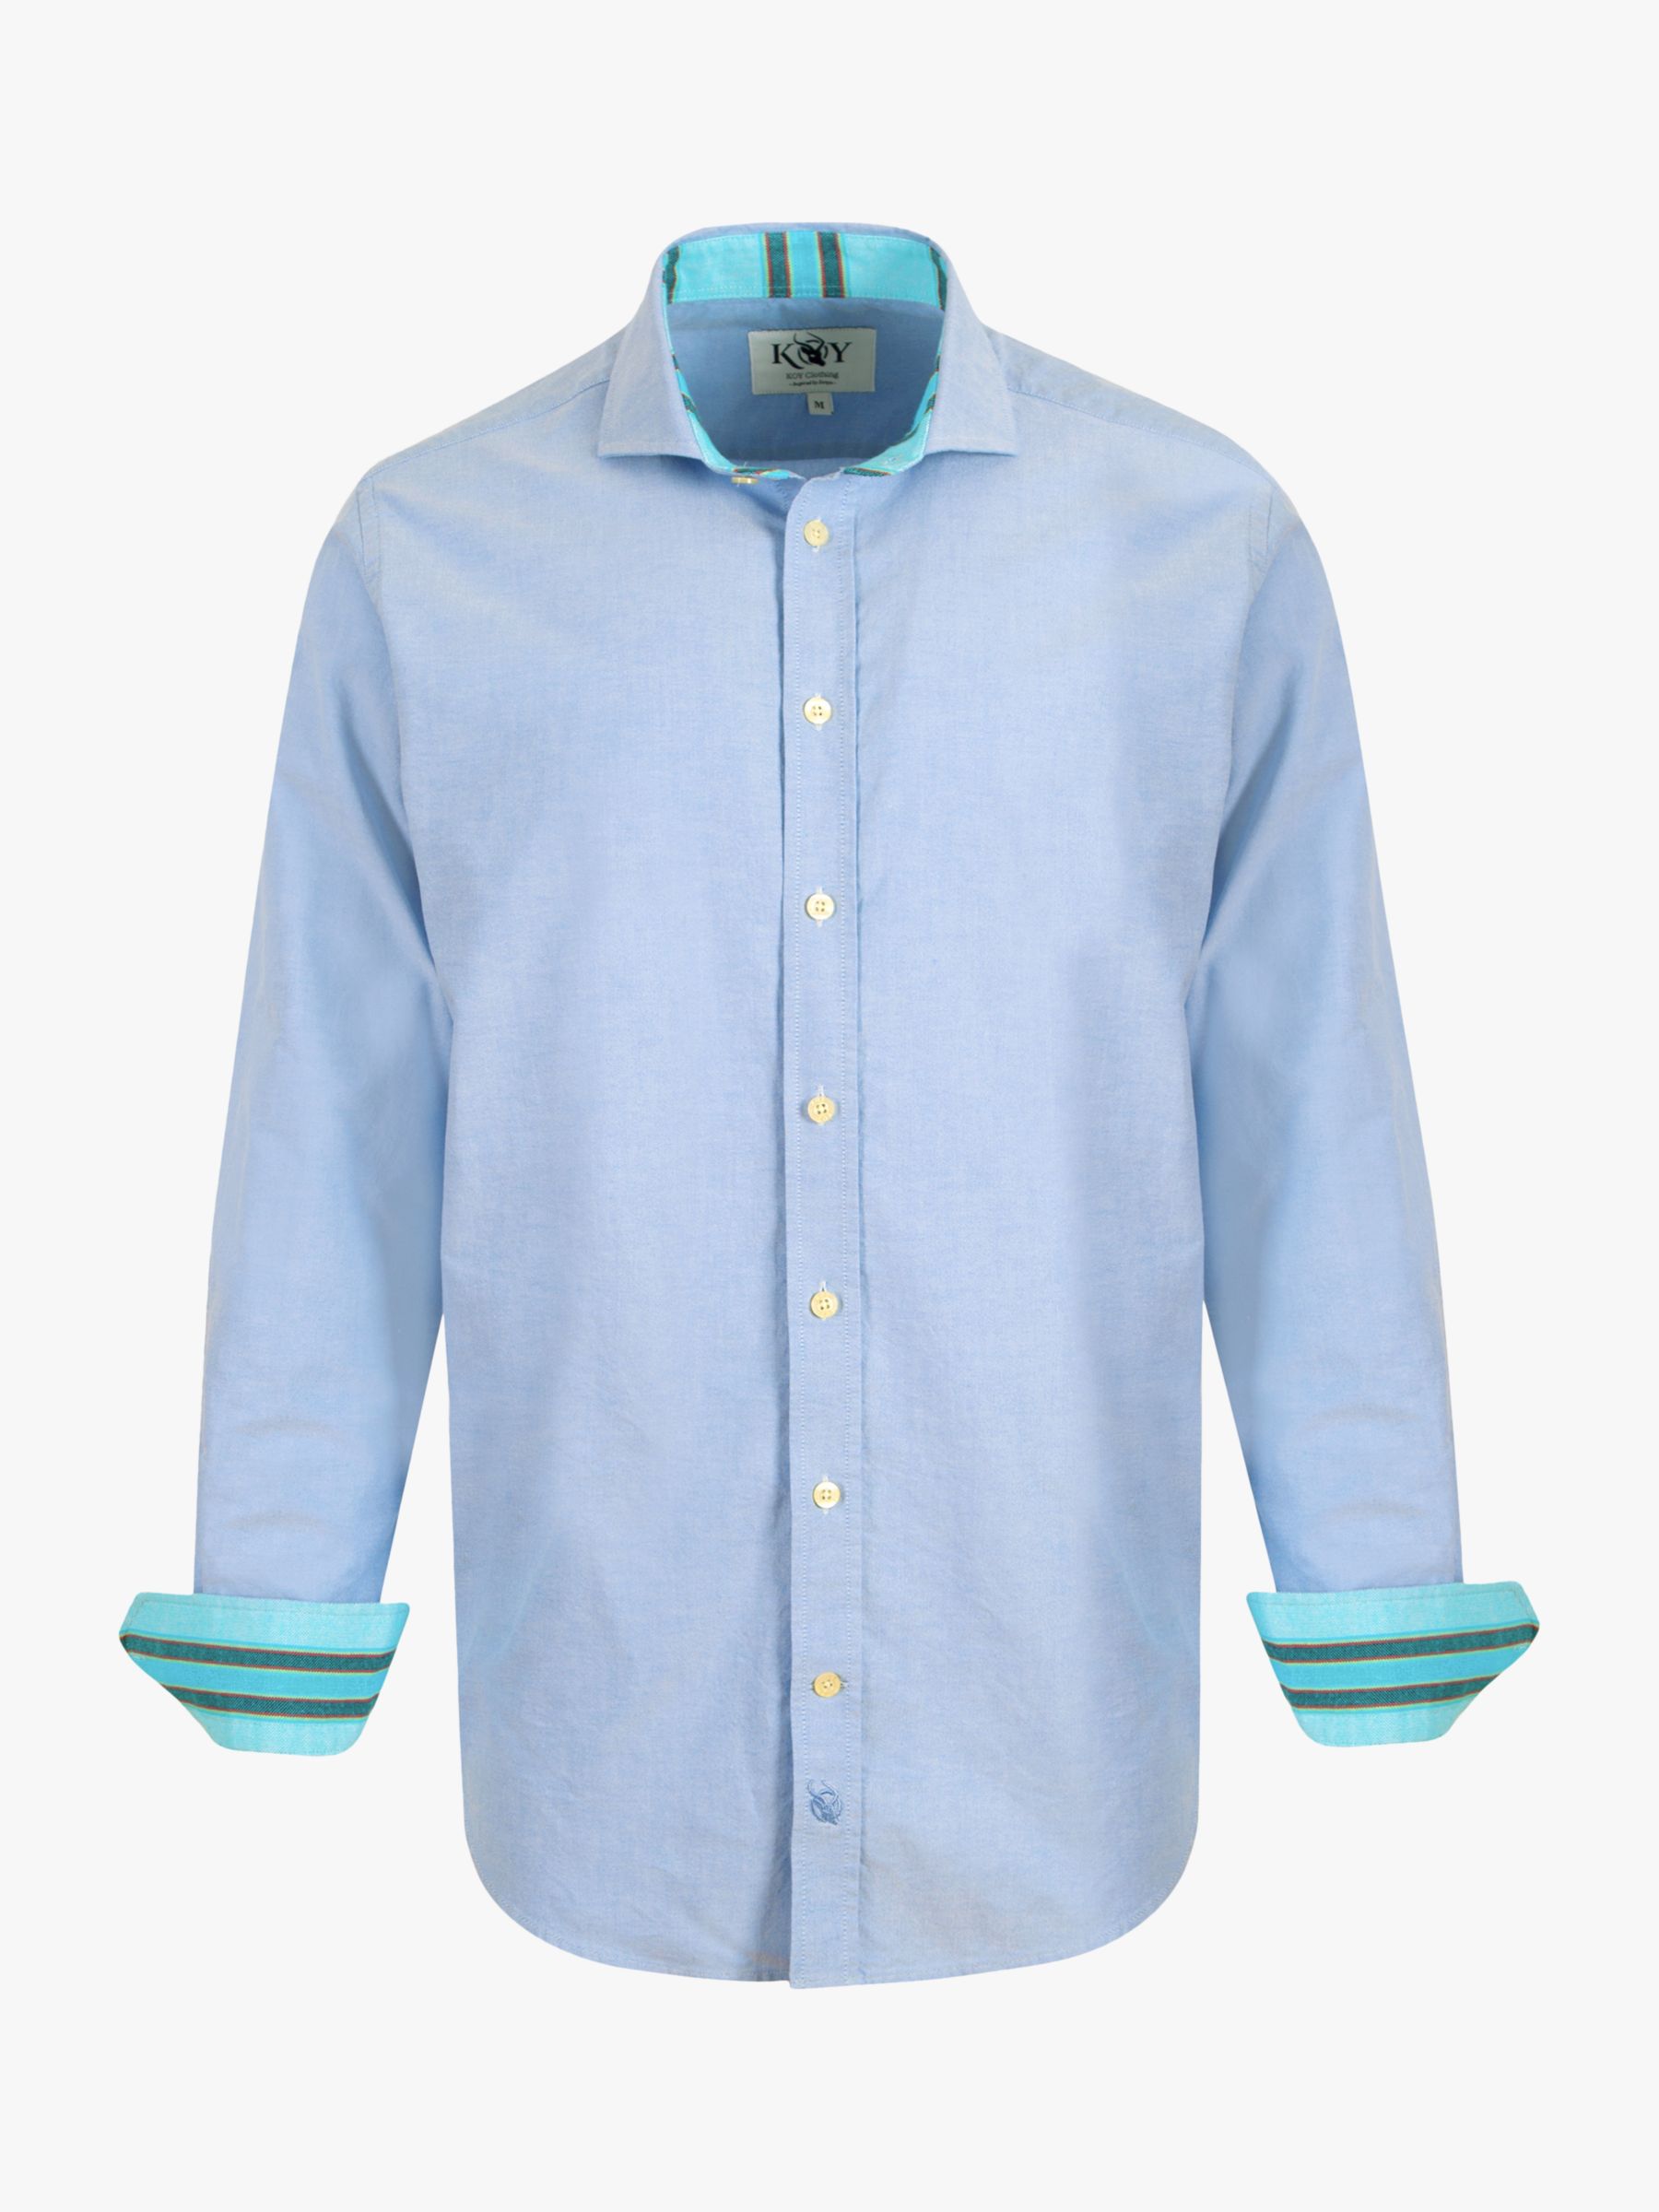 KOY Oxford Cotton Shirt, Blue Mid, S